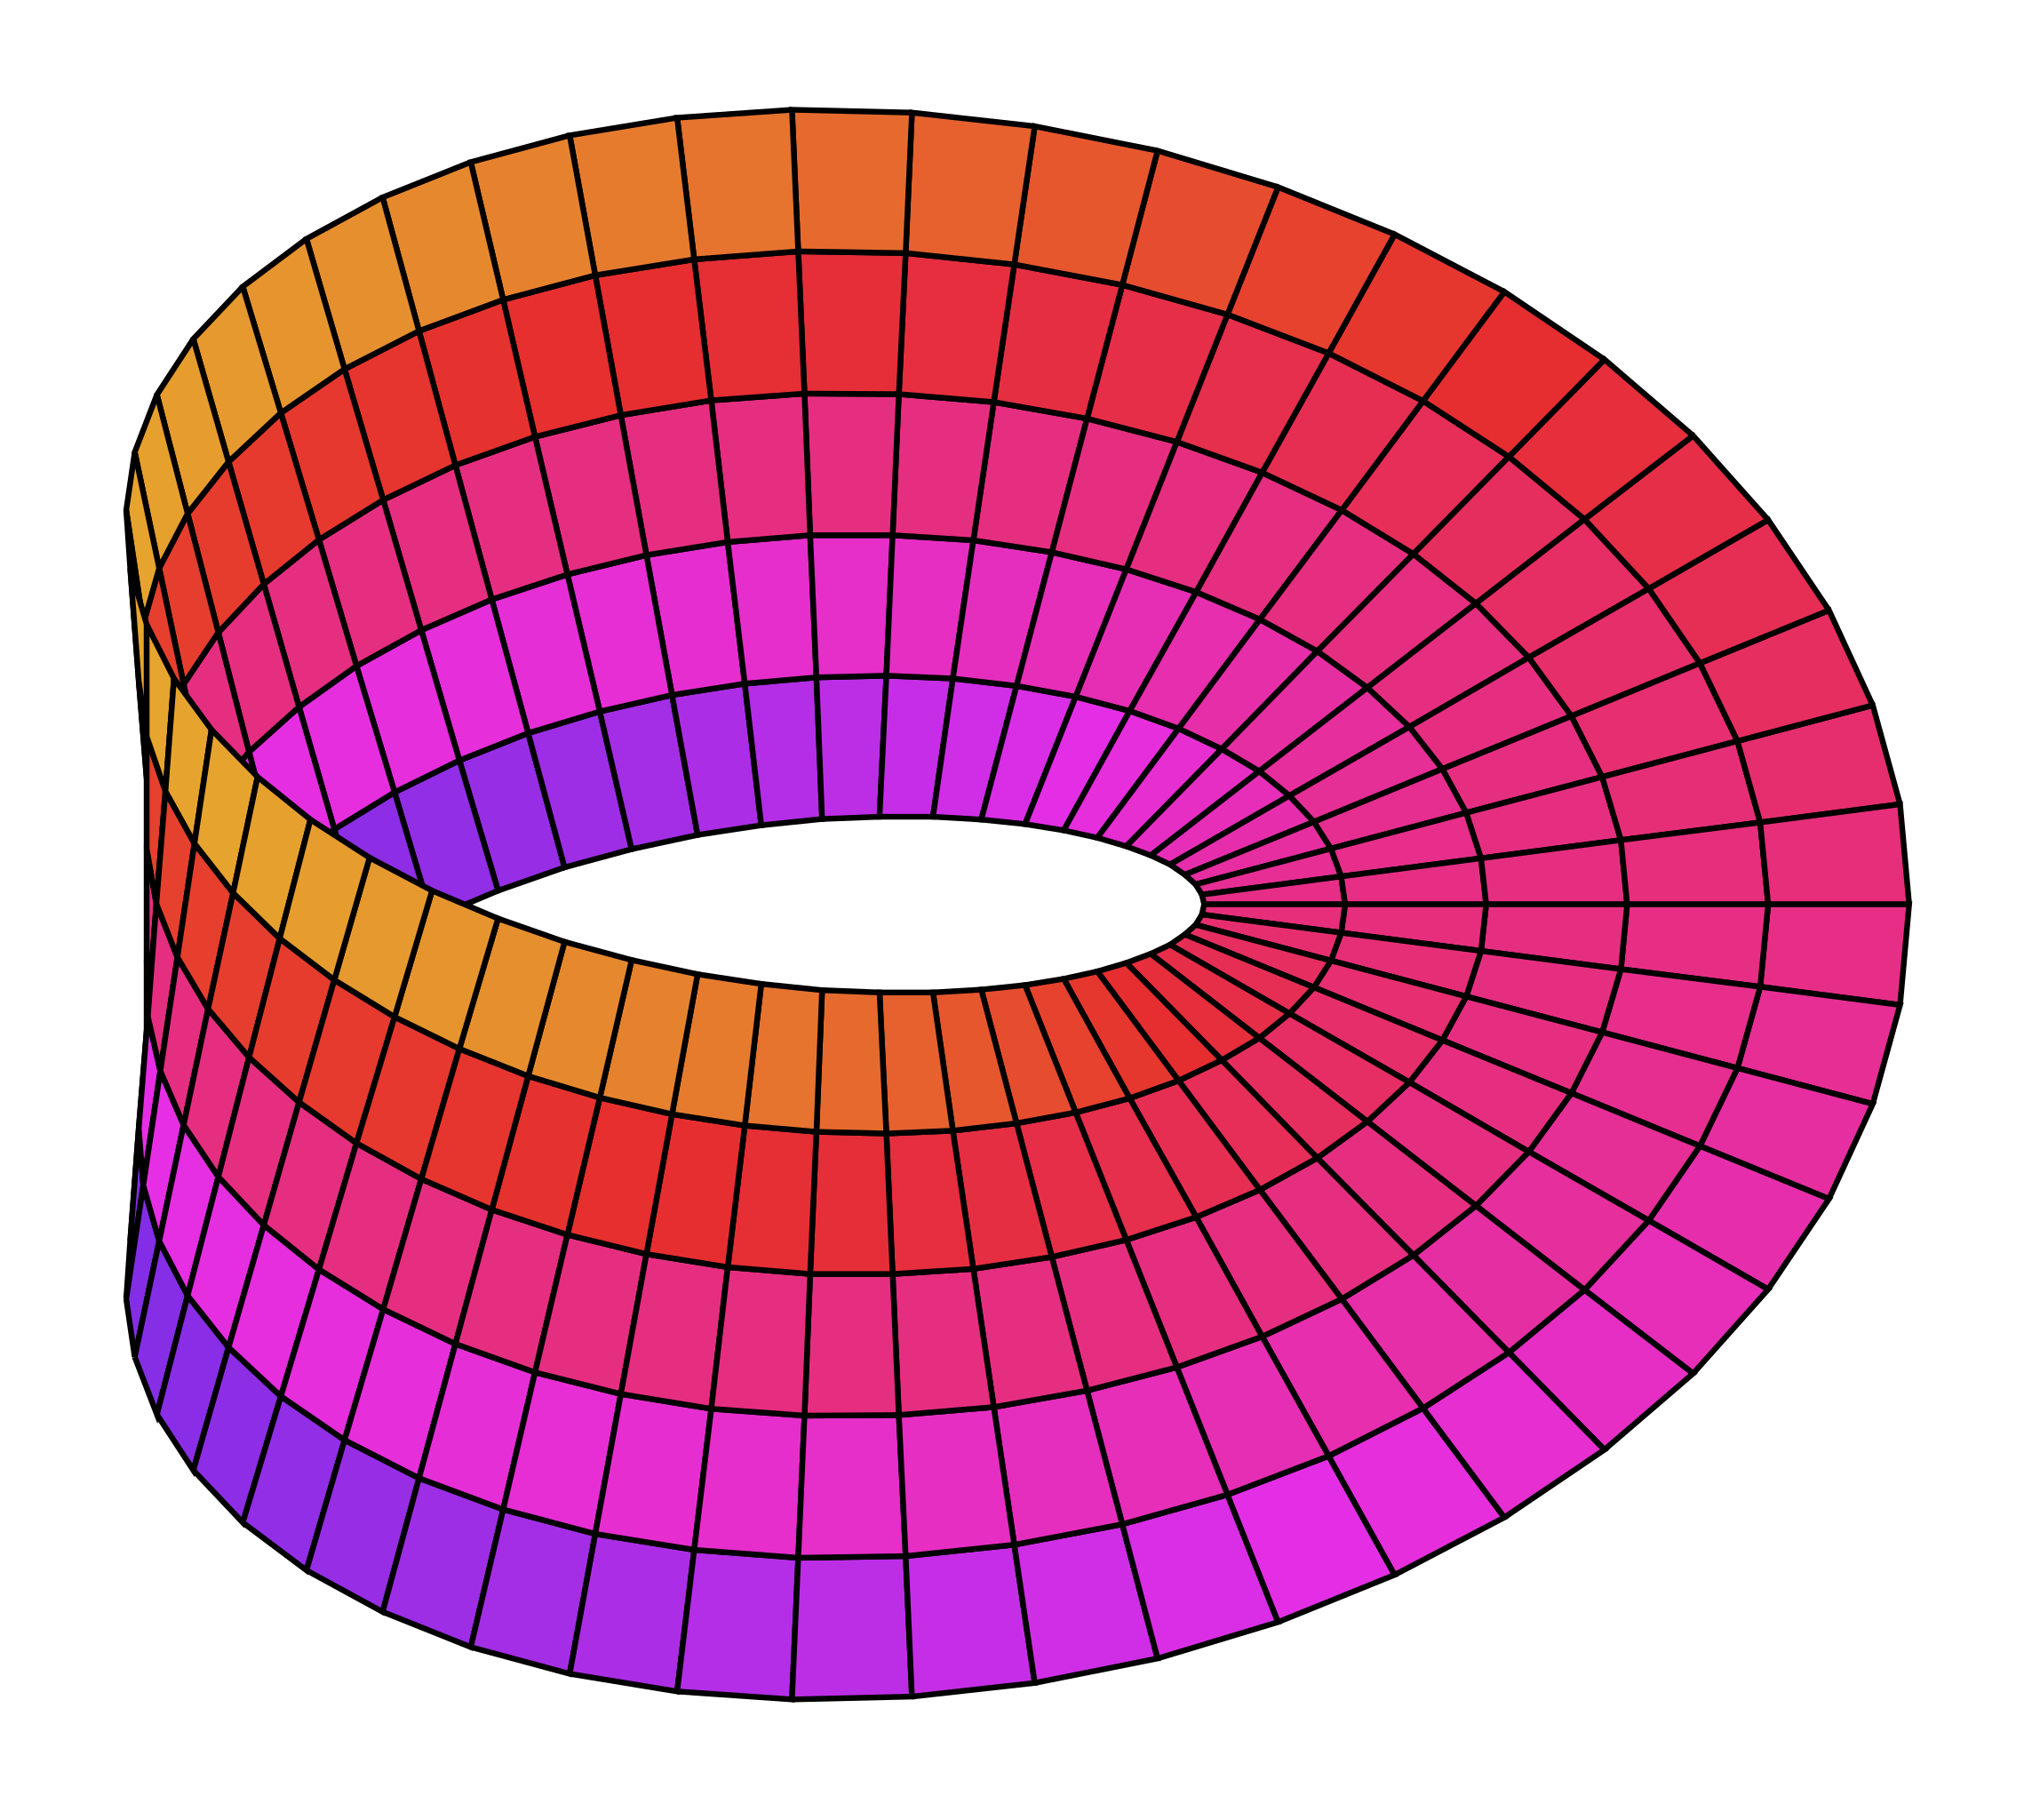 graphic representation of a Moebius strip